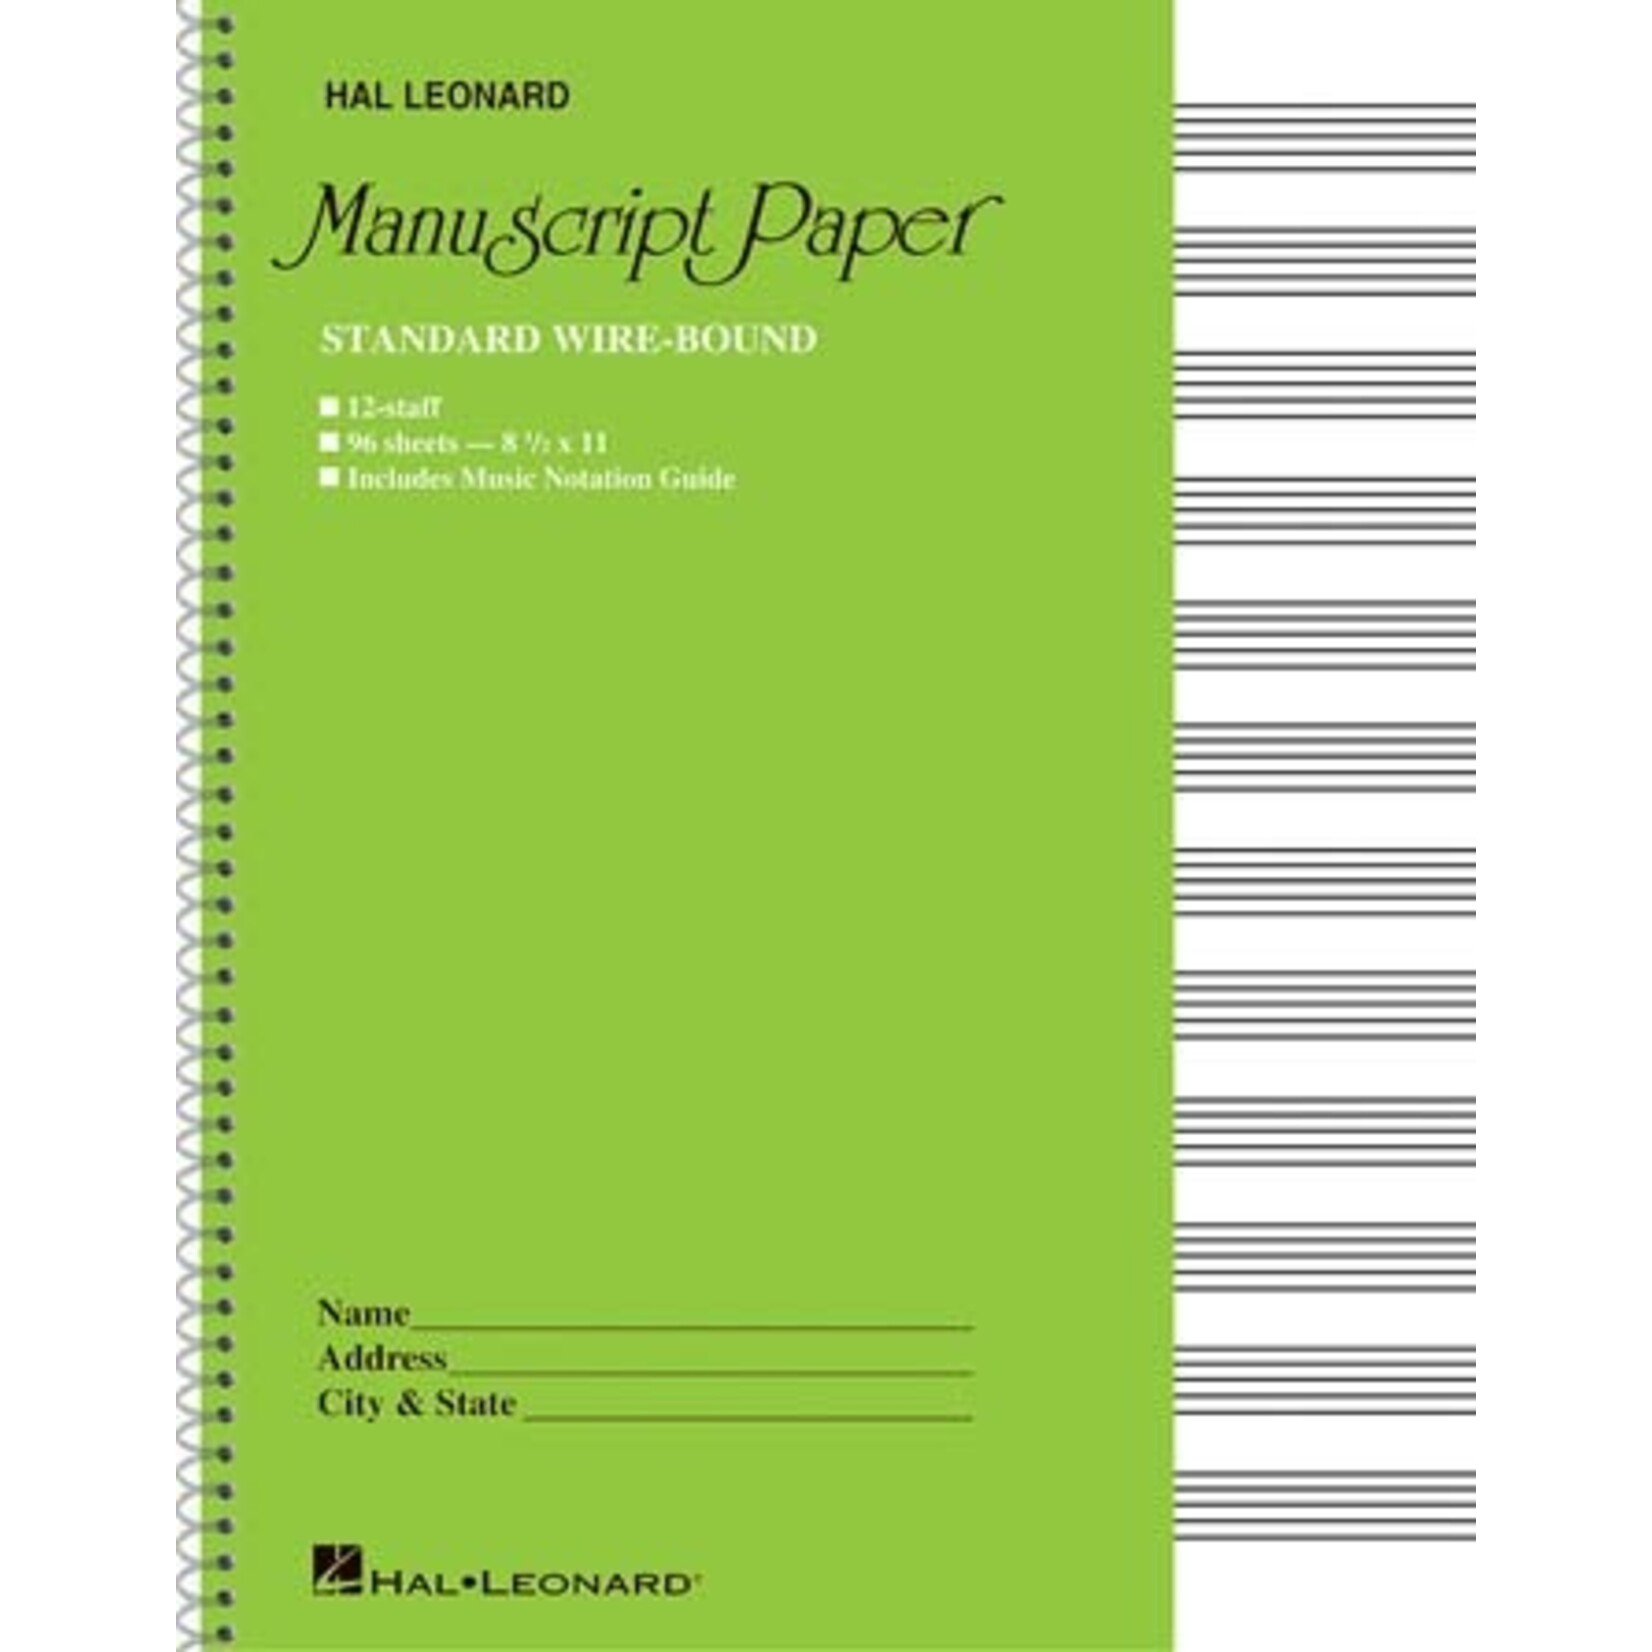 Hal Leonard Standard Wirebound Manuscript Paper - Green Cover